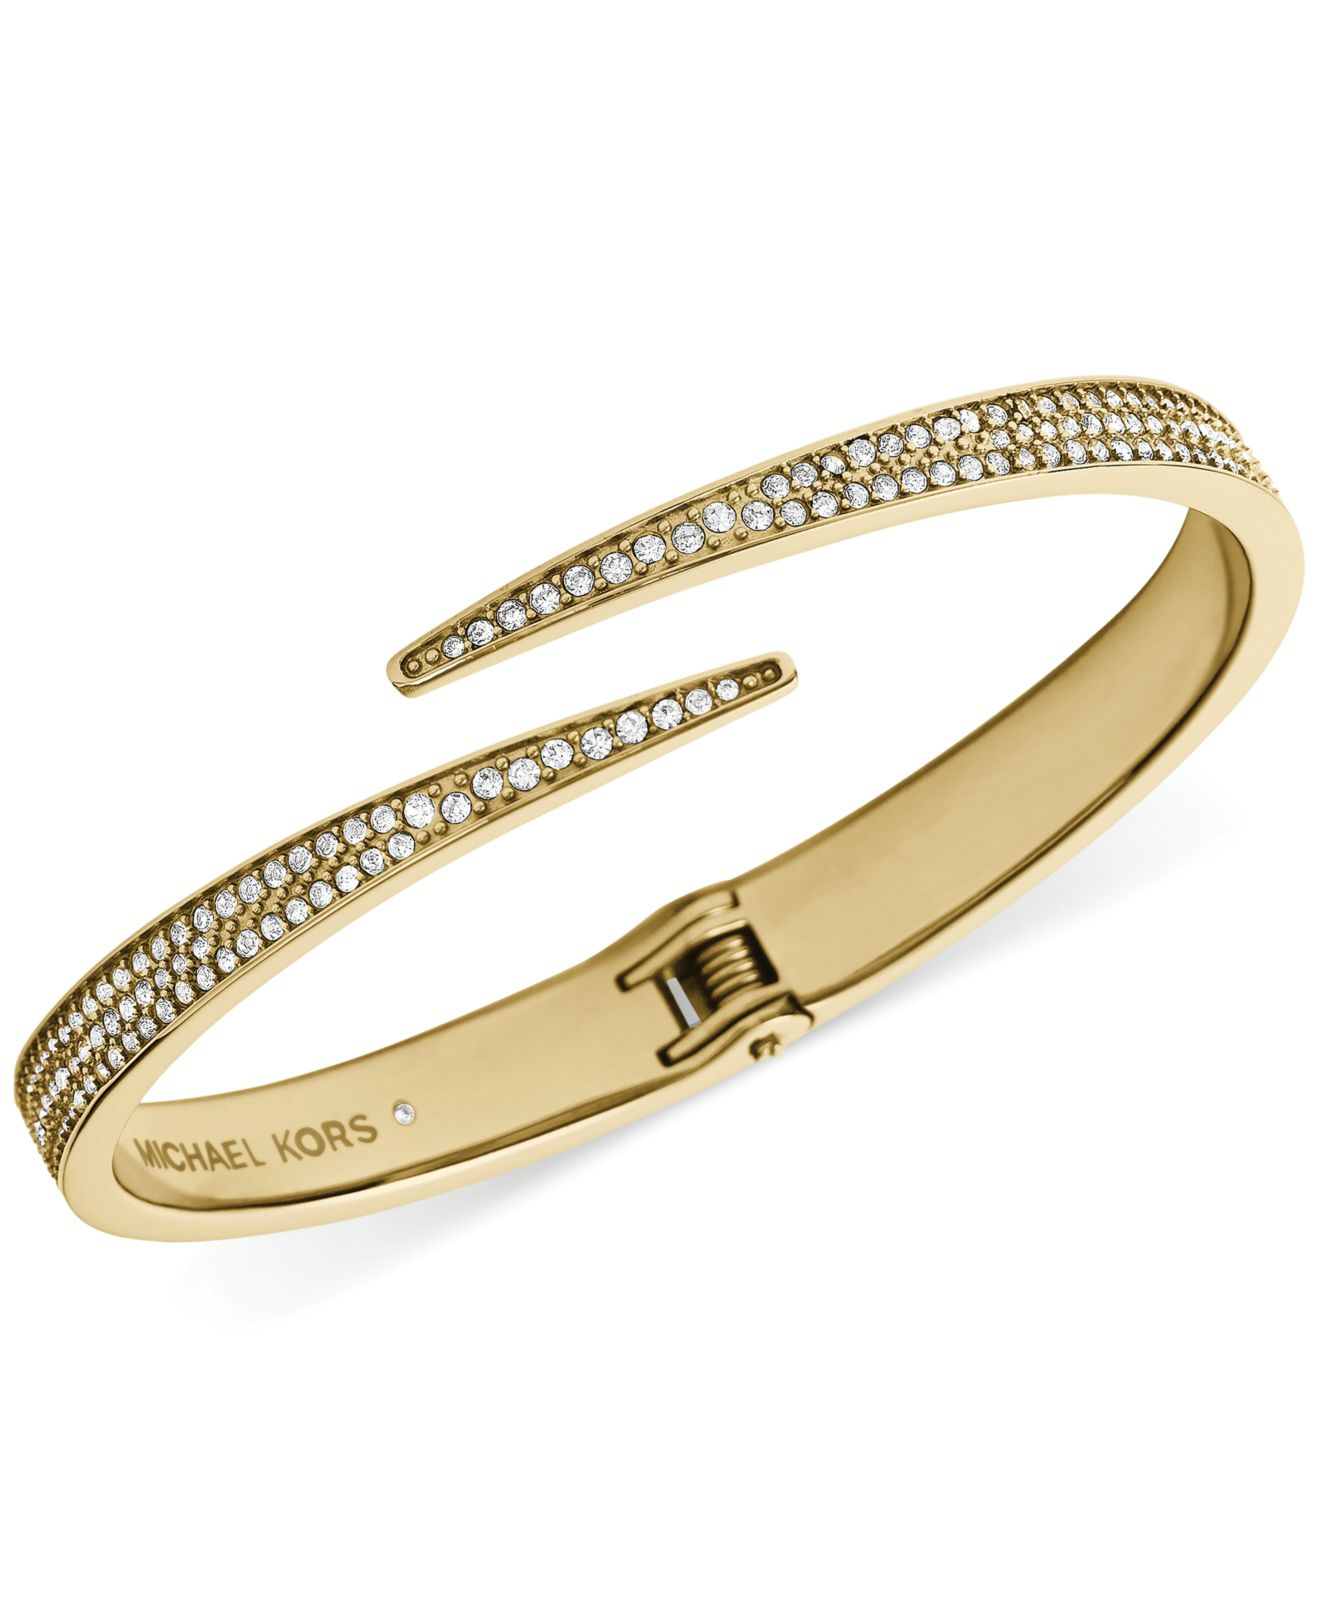 Michael Kors Gold-Tone Glass Stone Bypass Bracelet in Metallic - Lyst